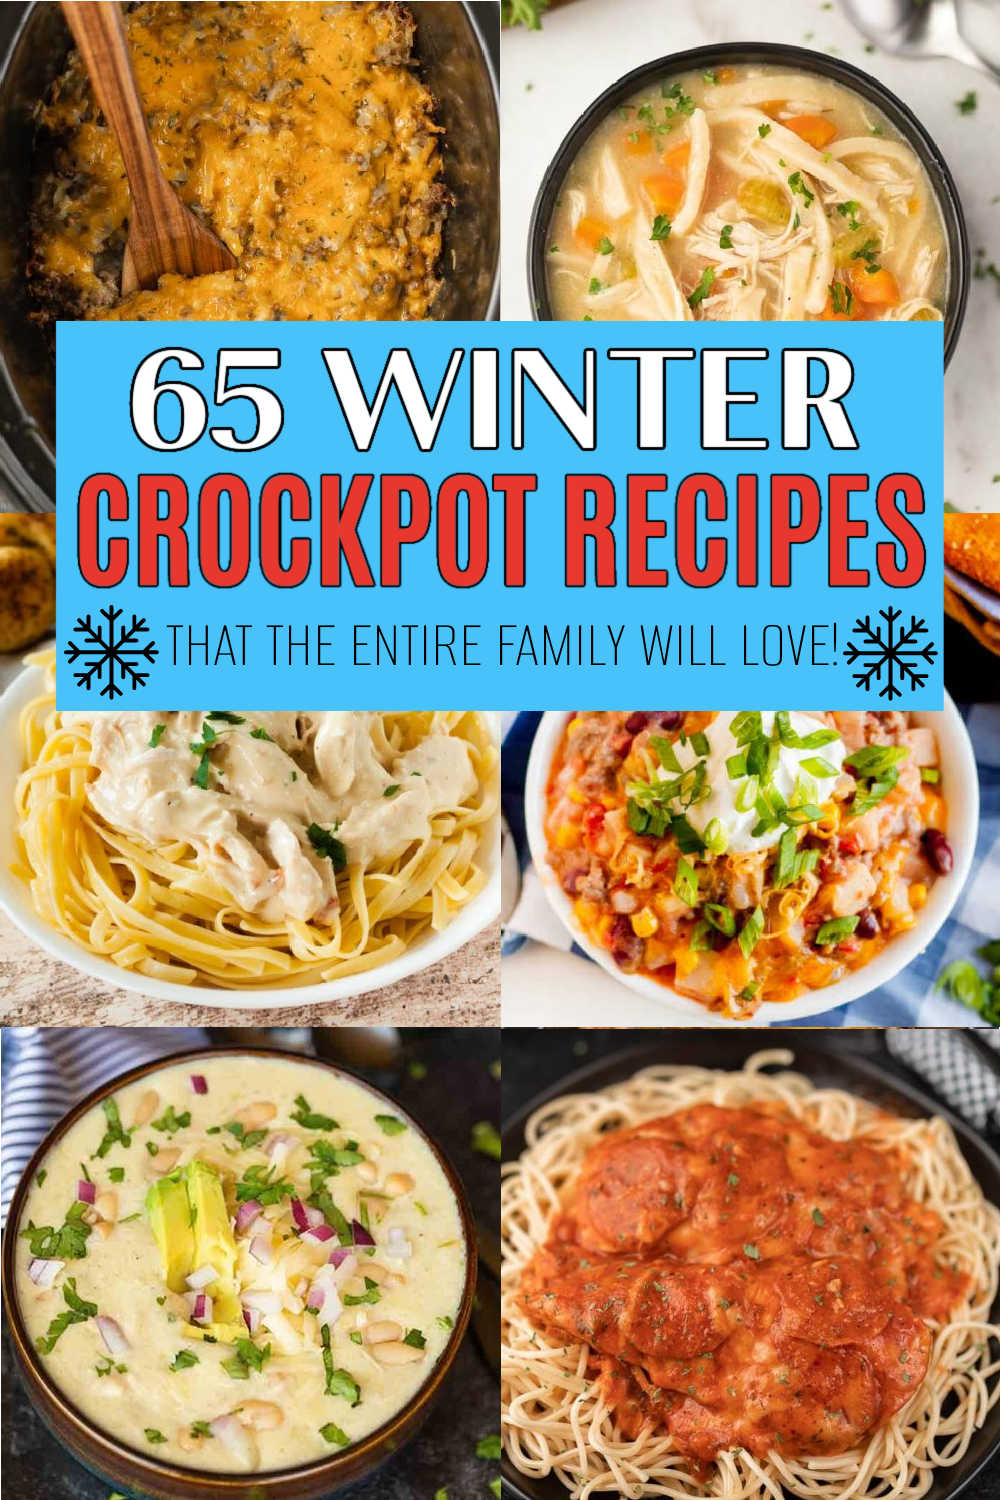 https://www.eatingonadime.com/wp-content/uploads/2022/10/Winter-Crockpot-Recipes-low.jpg